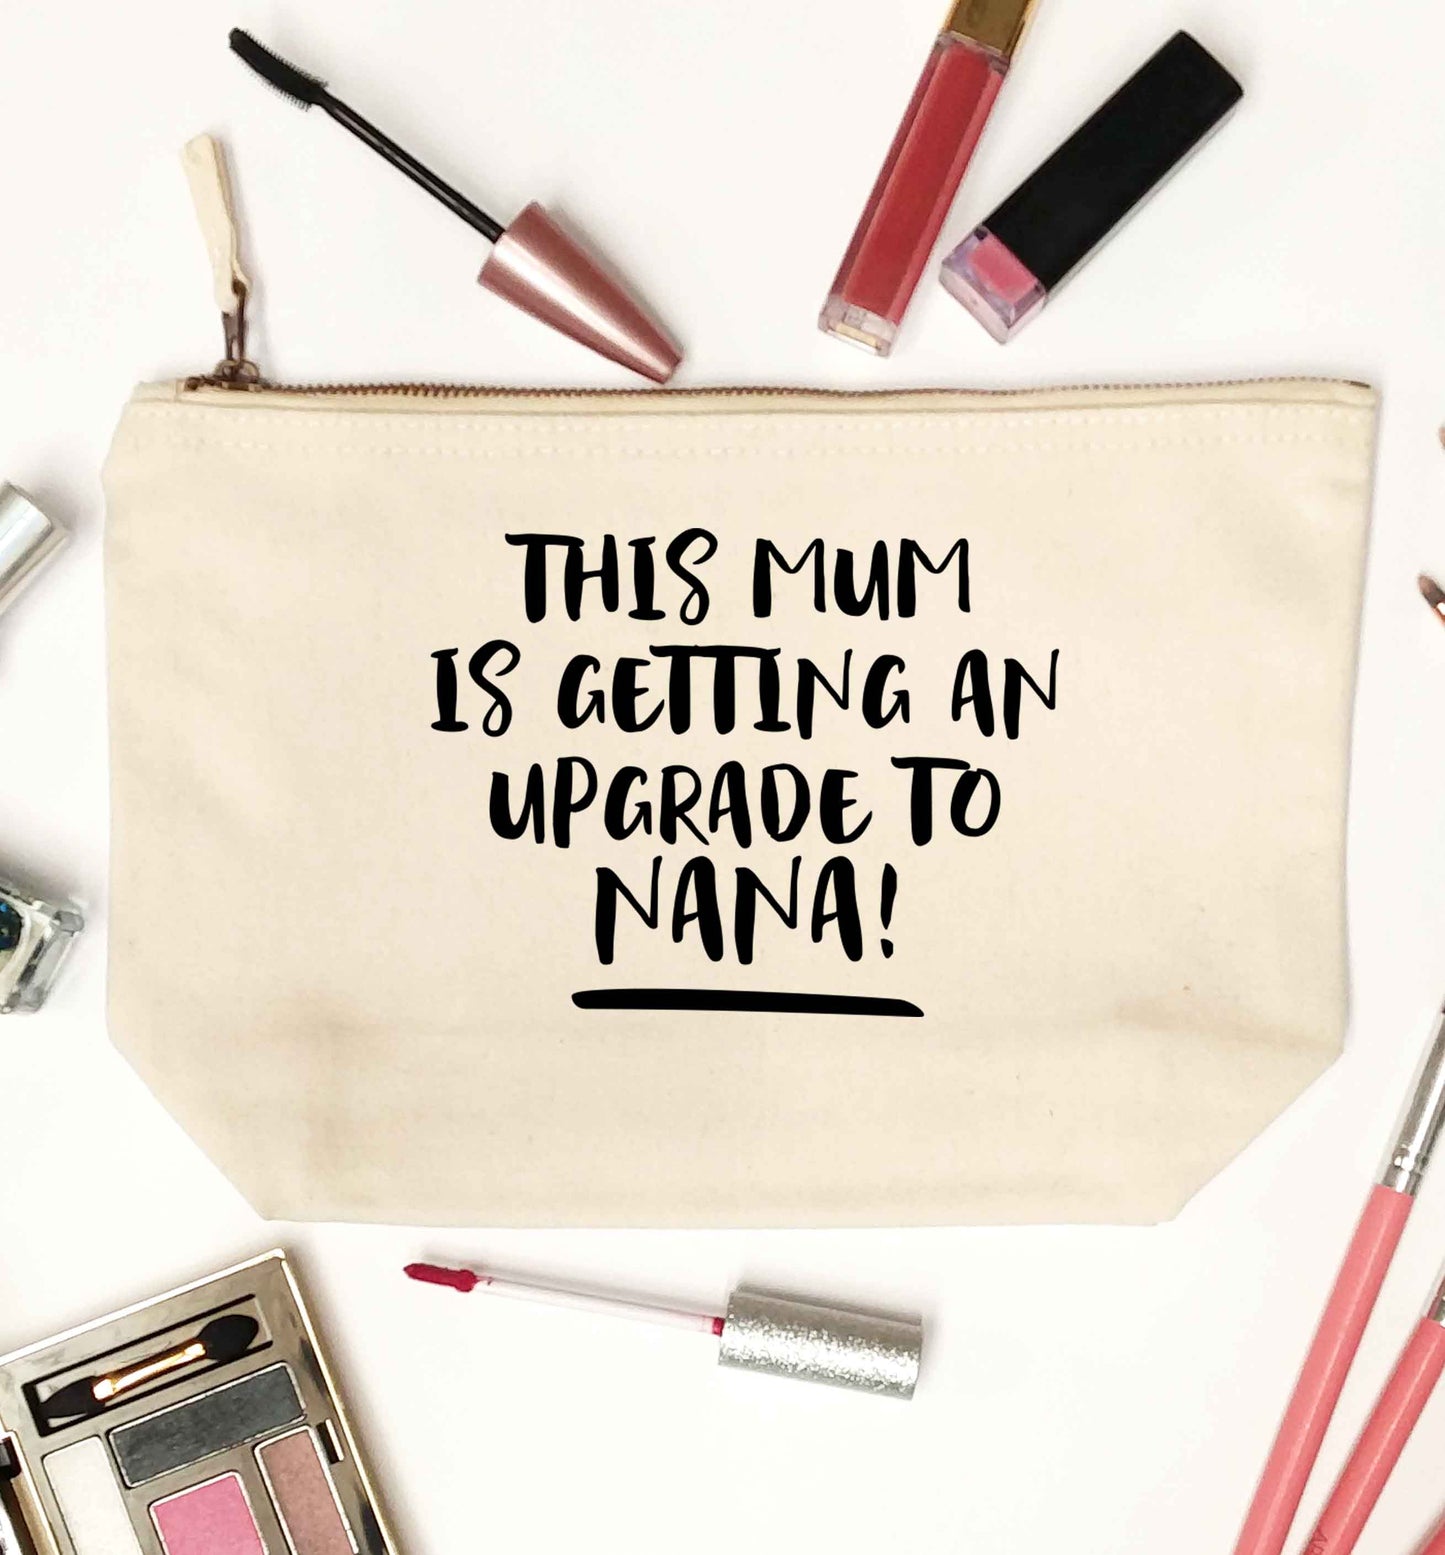 This mum is getting an upgrade to nana! natural makeup bag